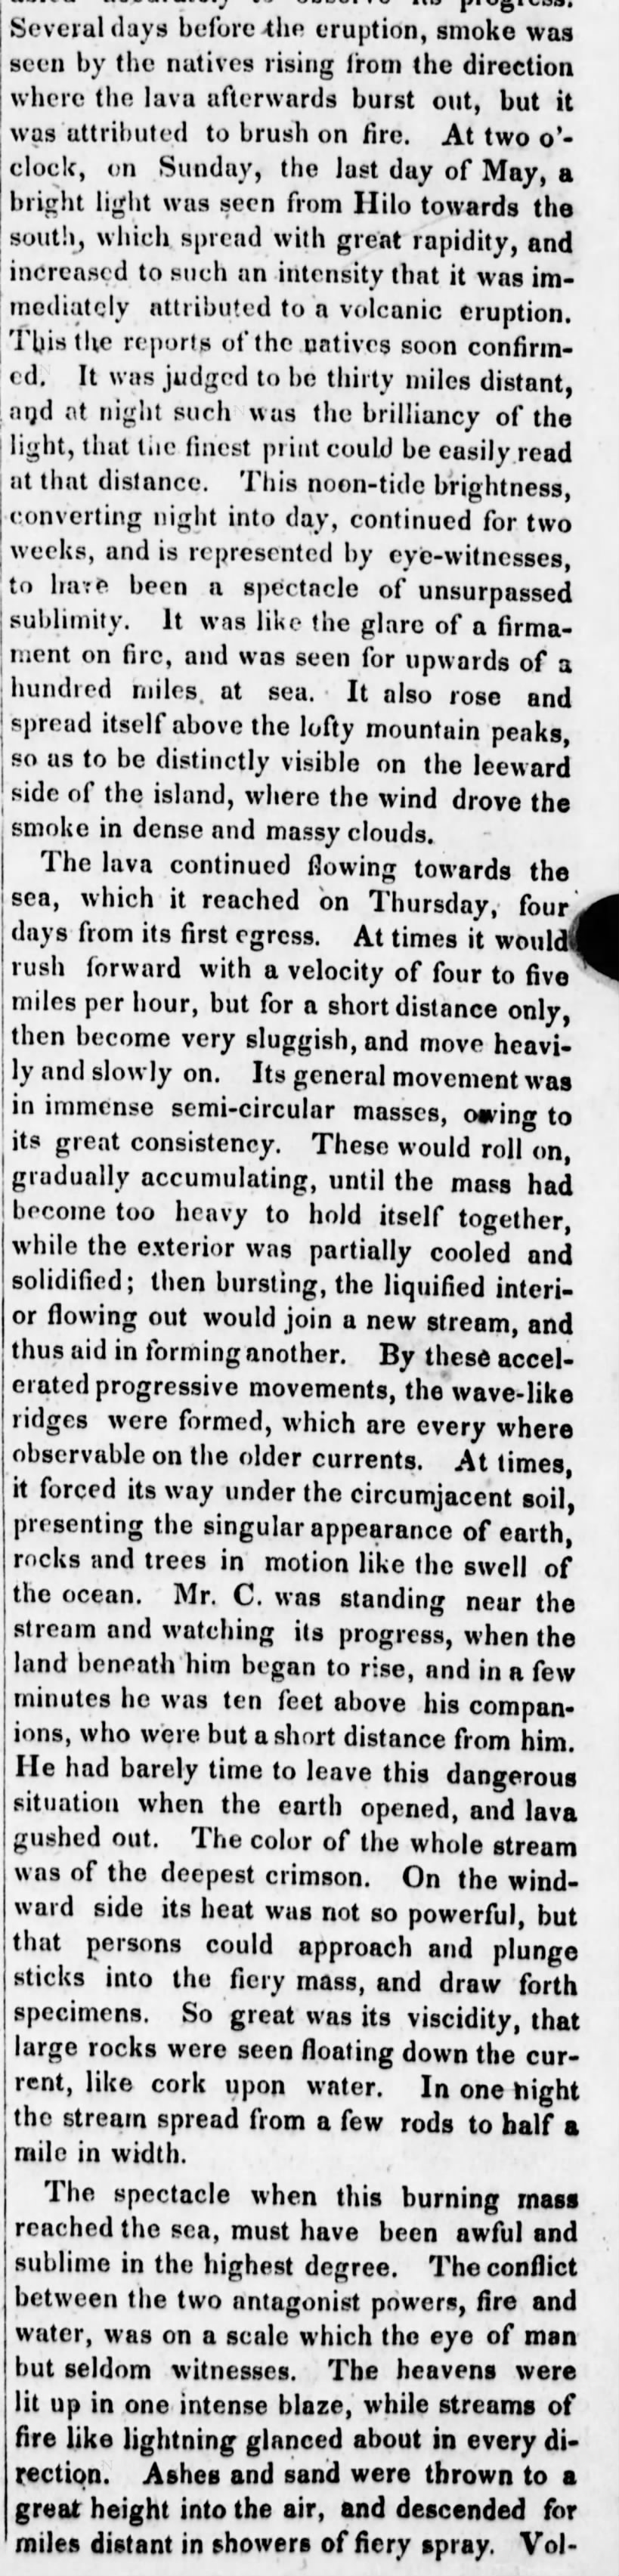 Account of Kilauea 1840 eruption, part 1